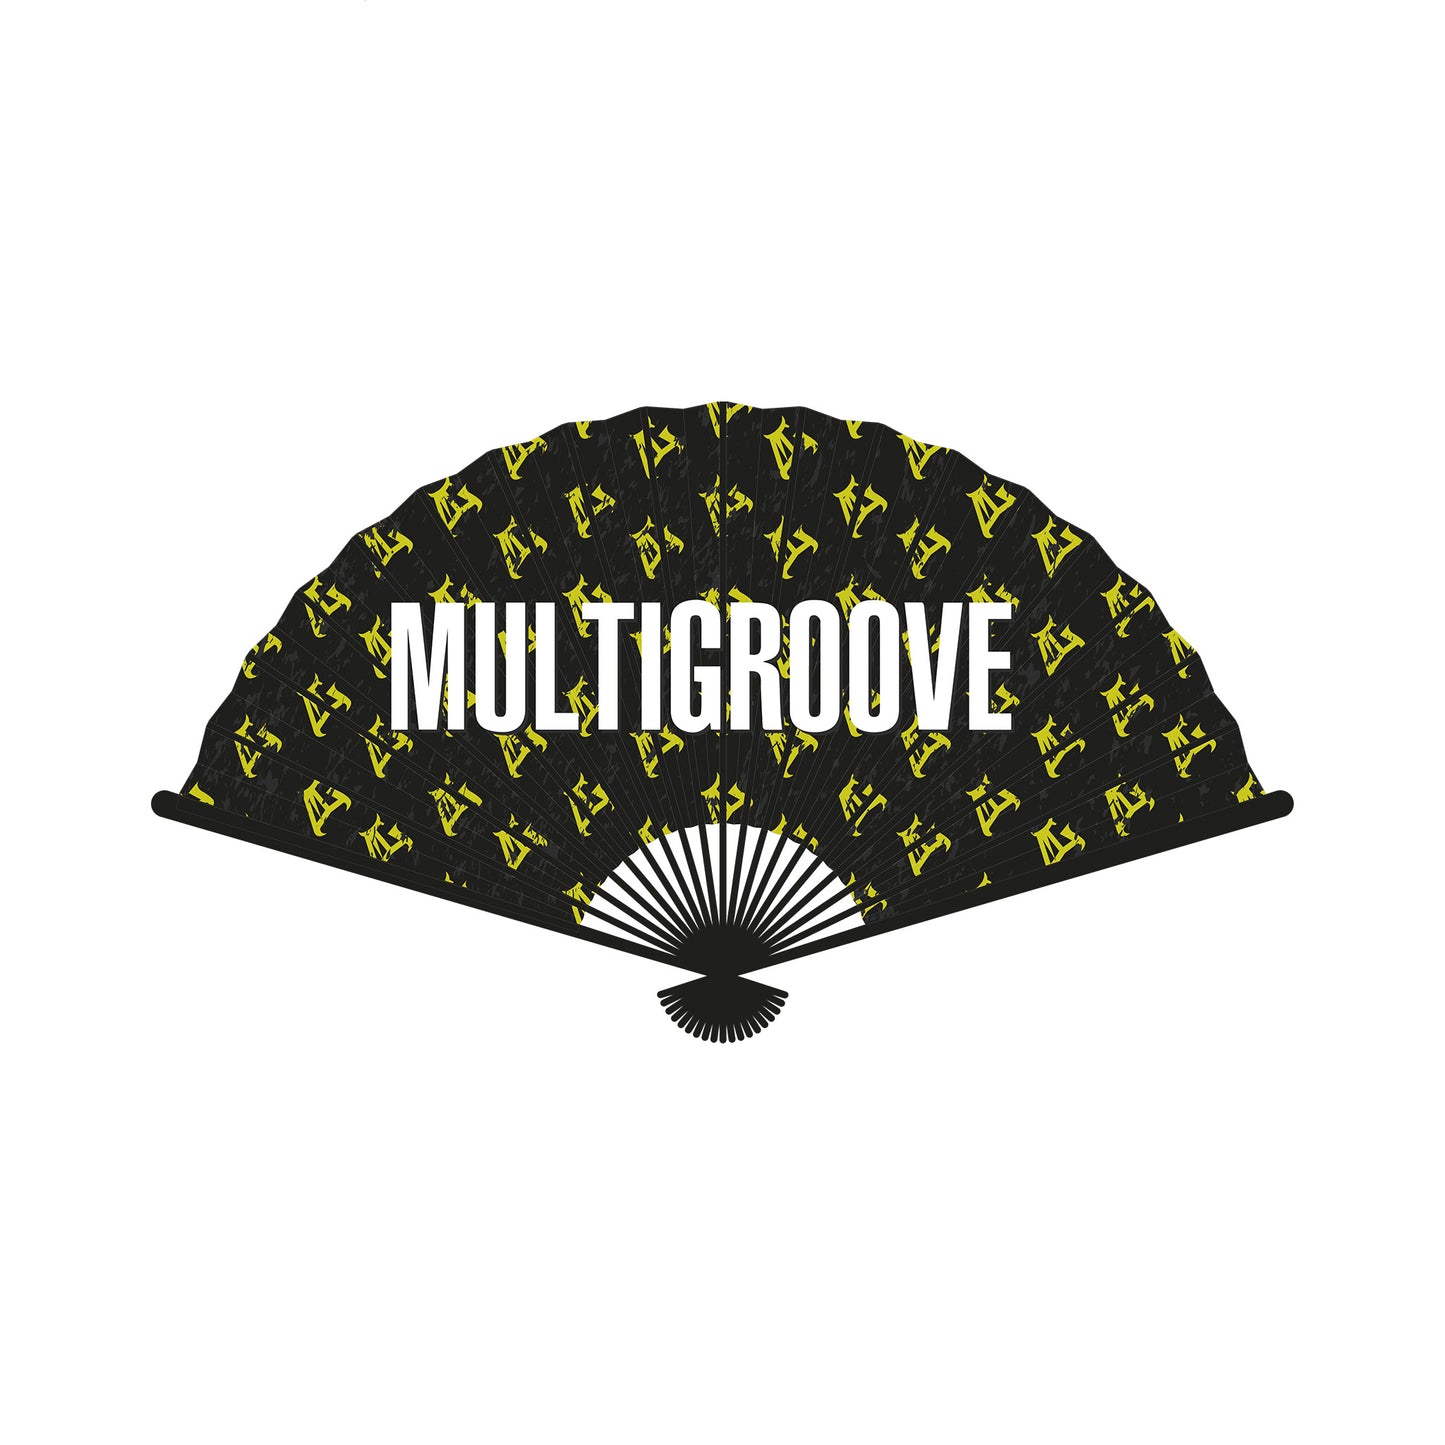 Multigroove Fan all-over black